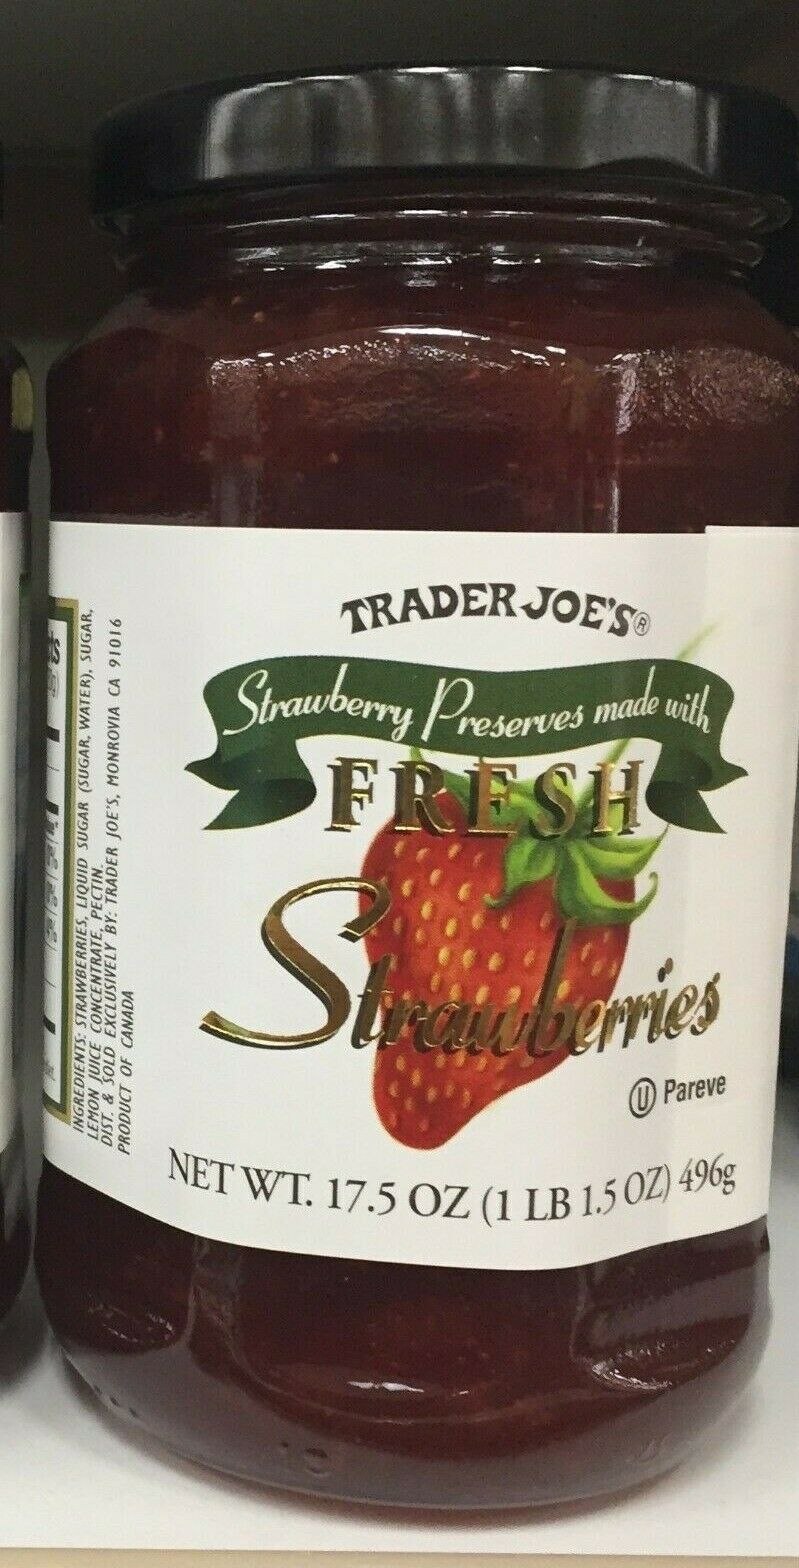 Trader Joe's Strawberry Preserves Made Fresh Strawberries Net 17.5 Oz Kosher